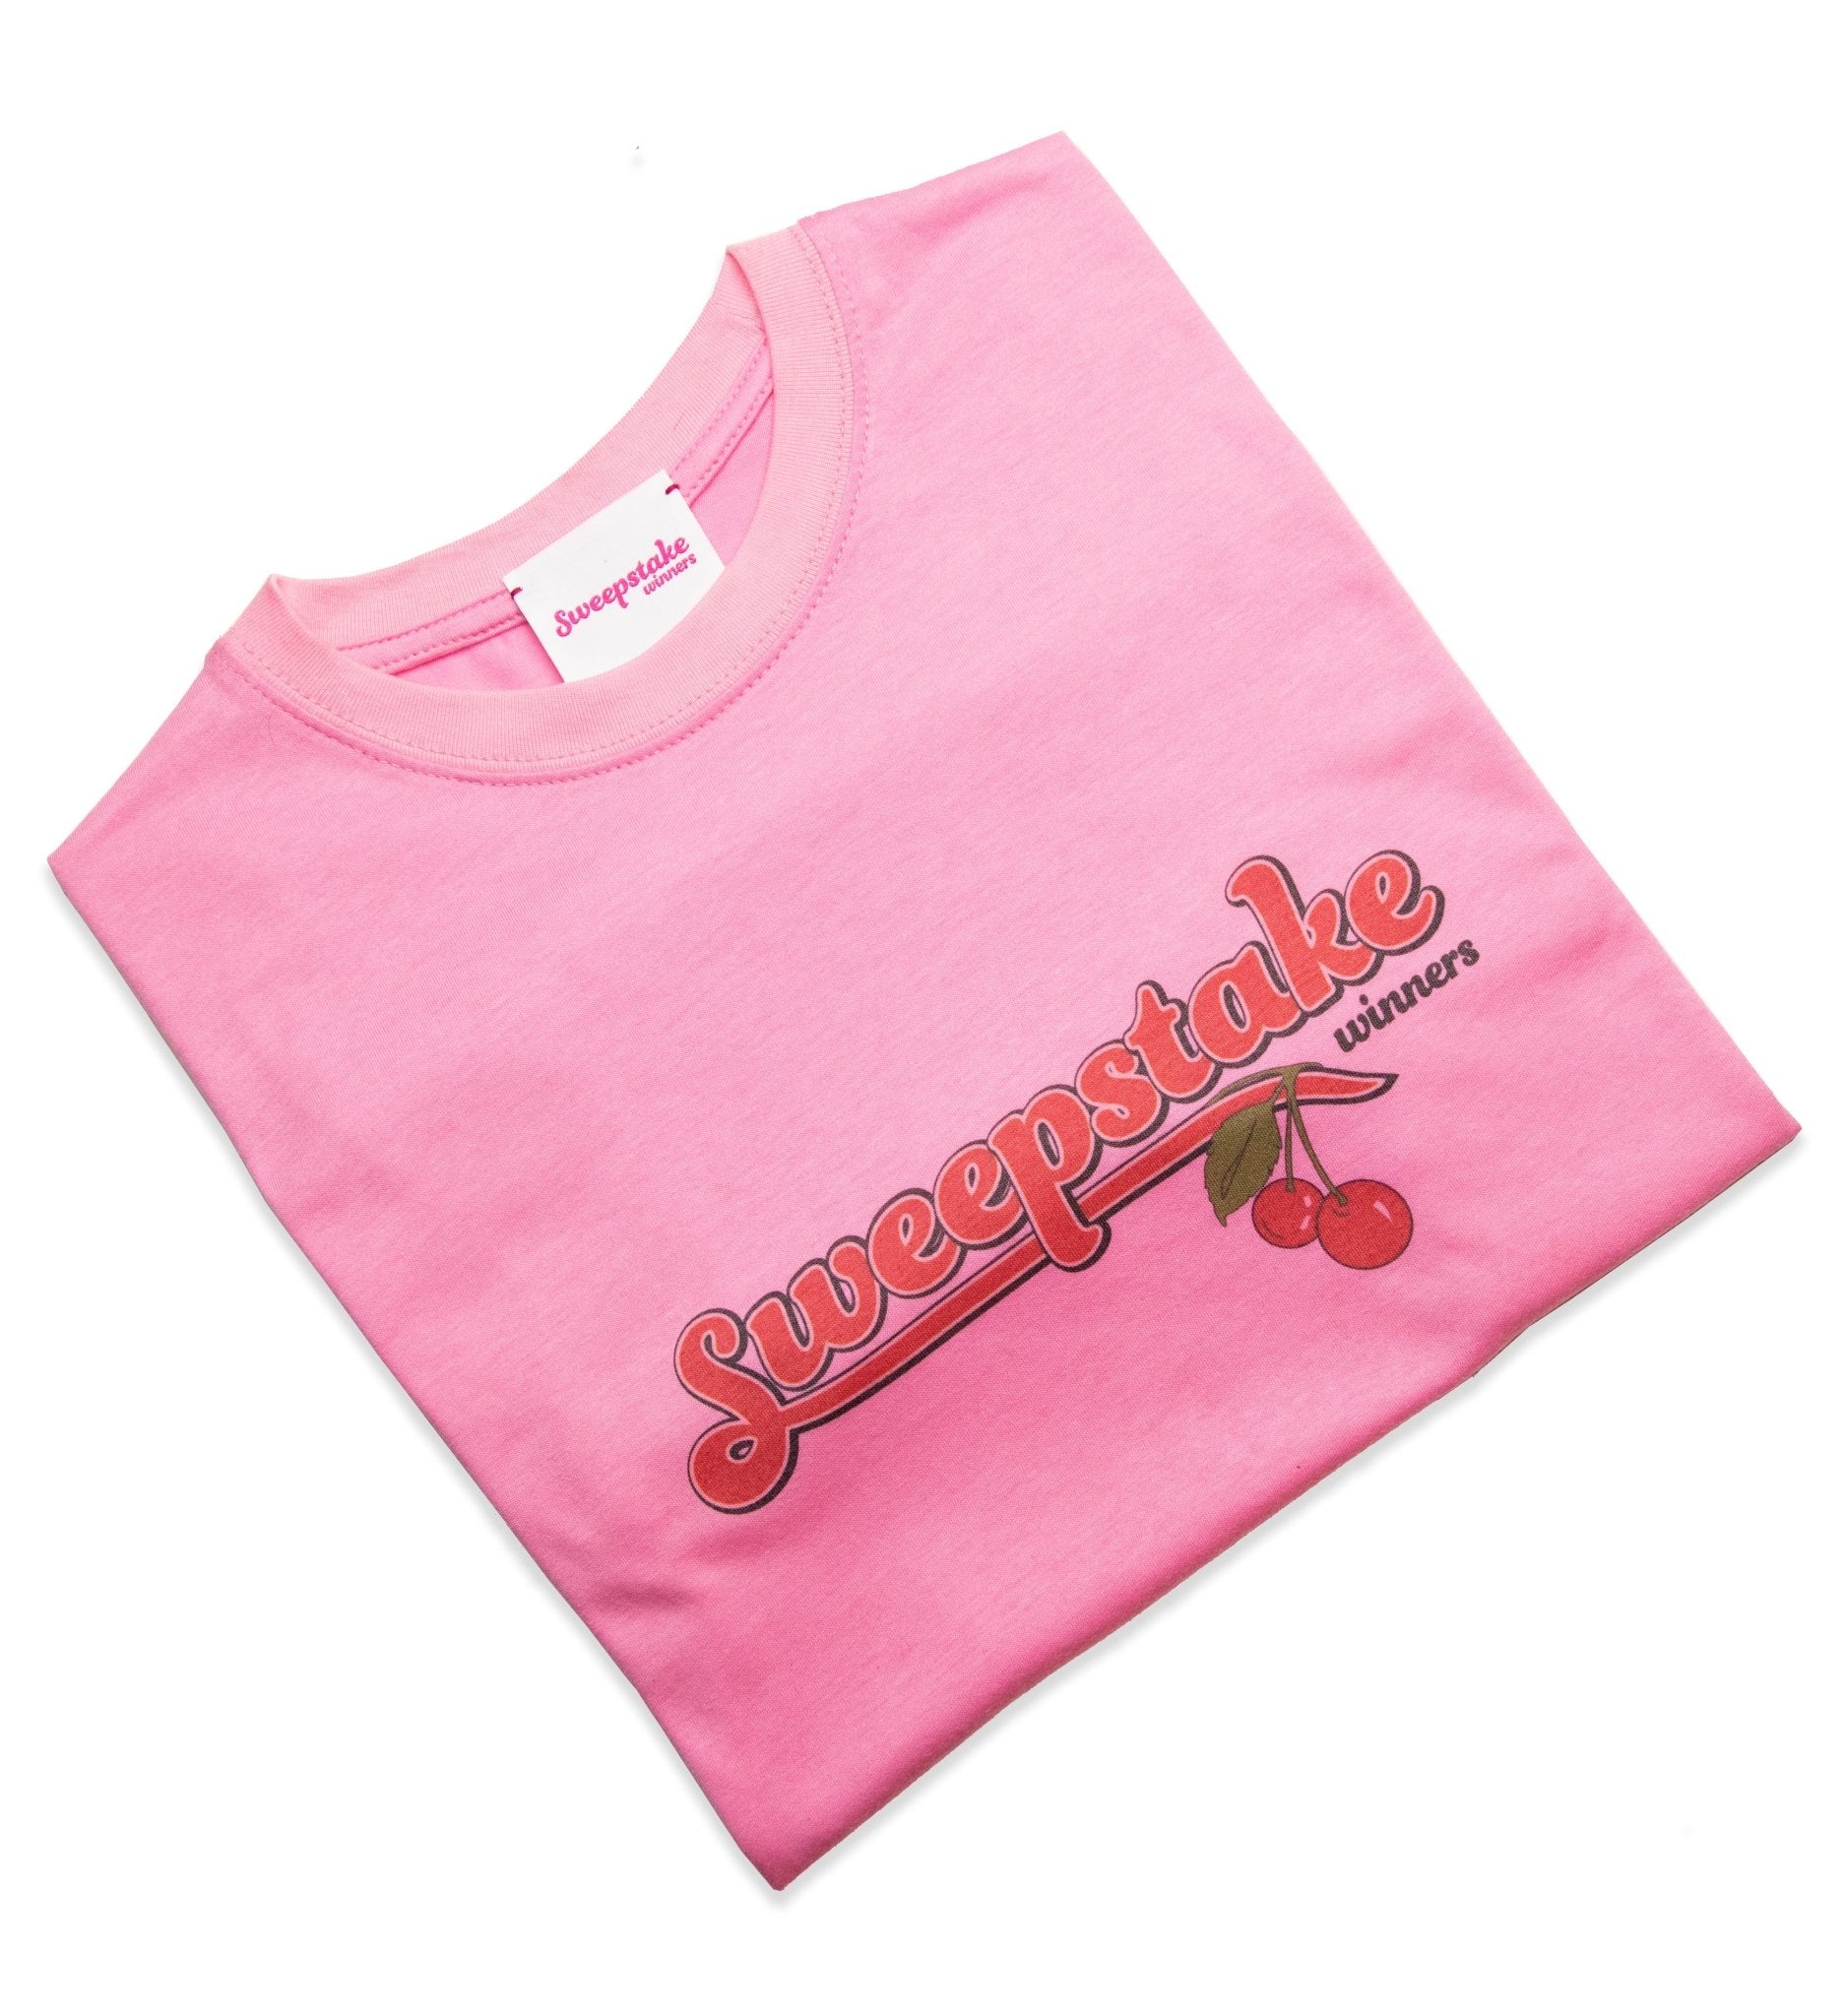 Cherries Logo Tee (Bubblegum) - Sweepstake Winners™